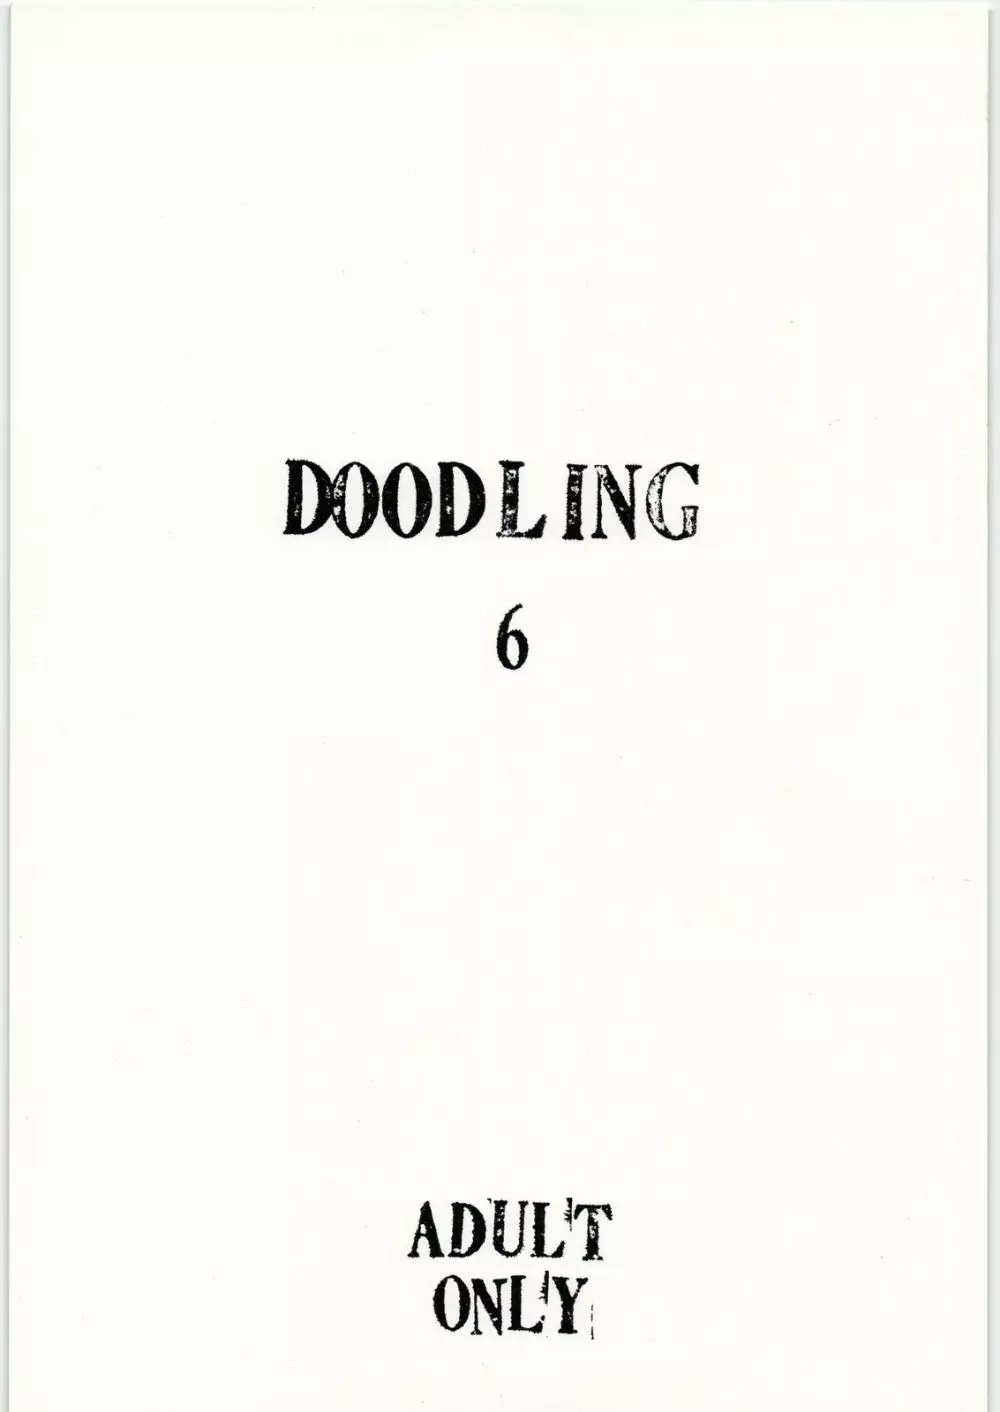 DOODLING 6